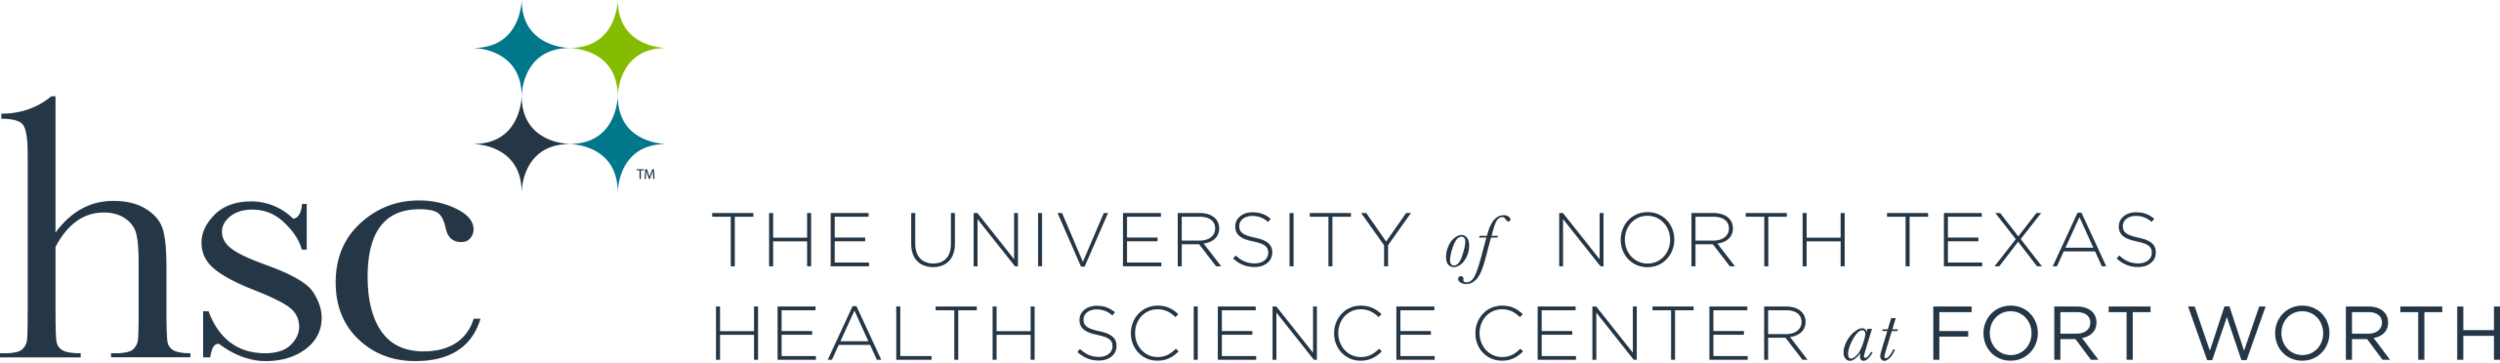 UNTHSC Logo.png